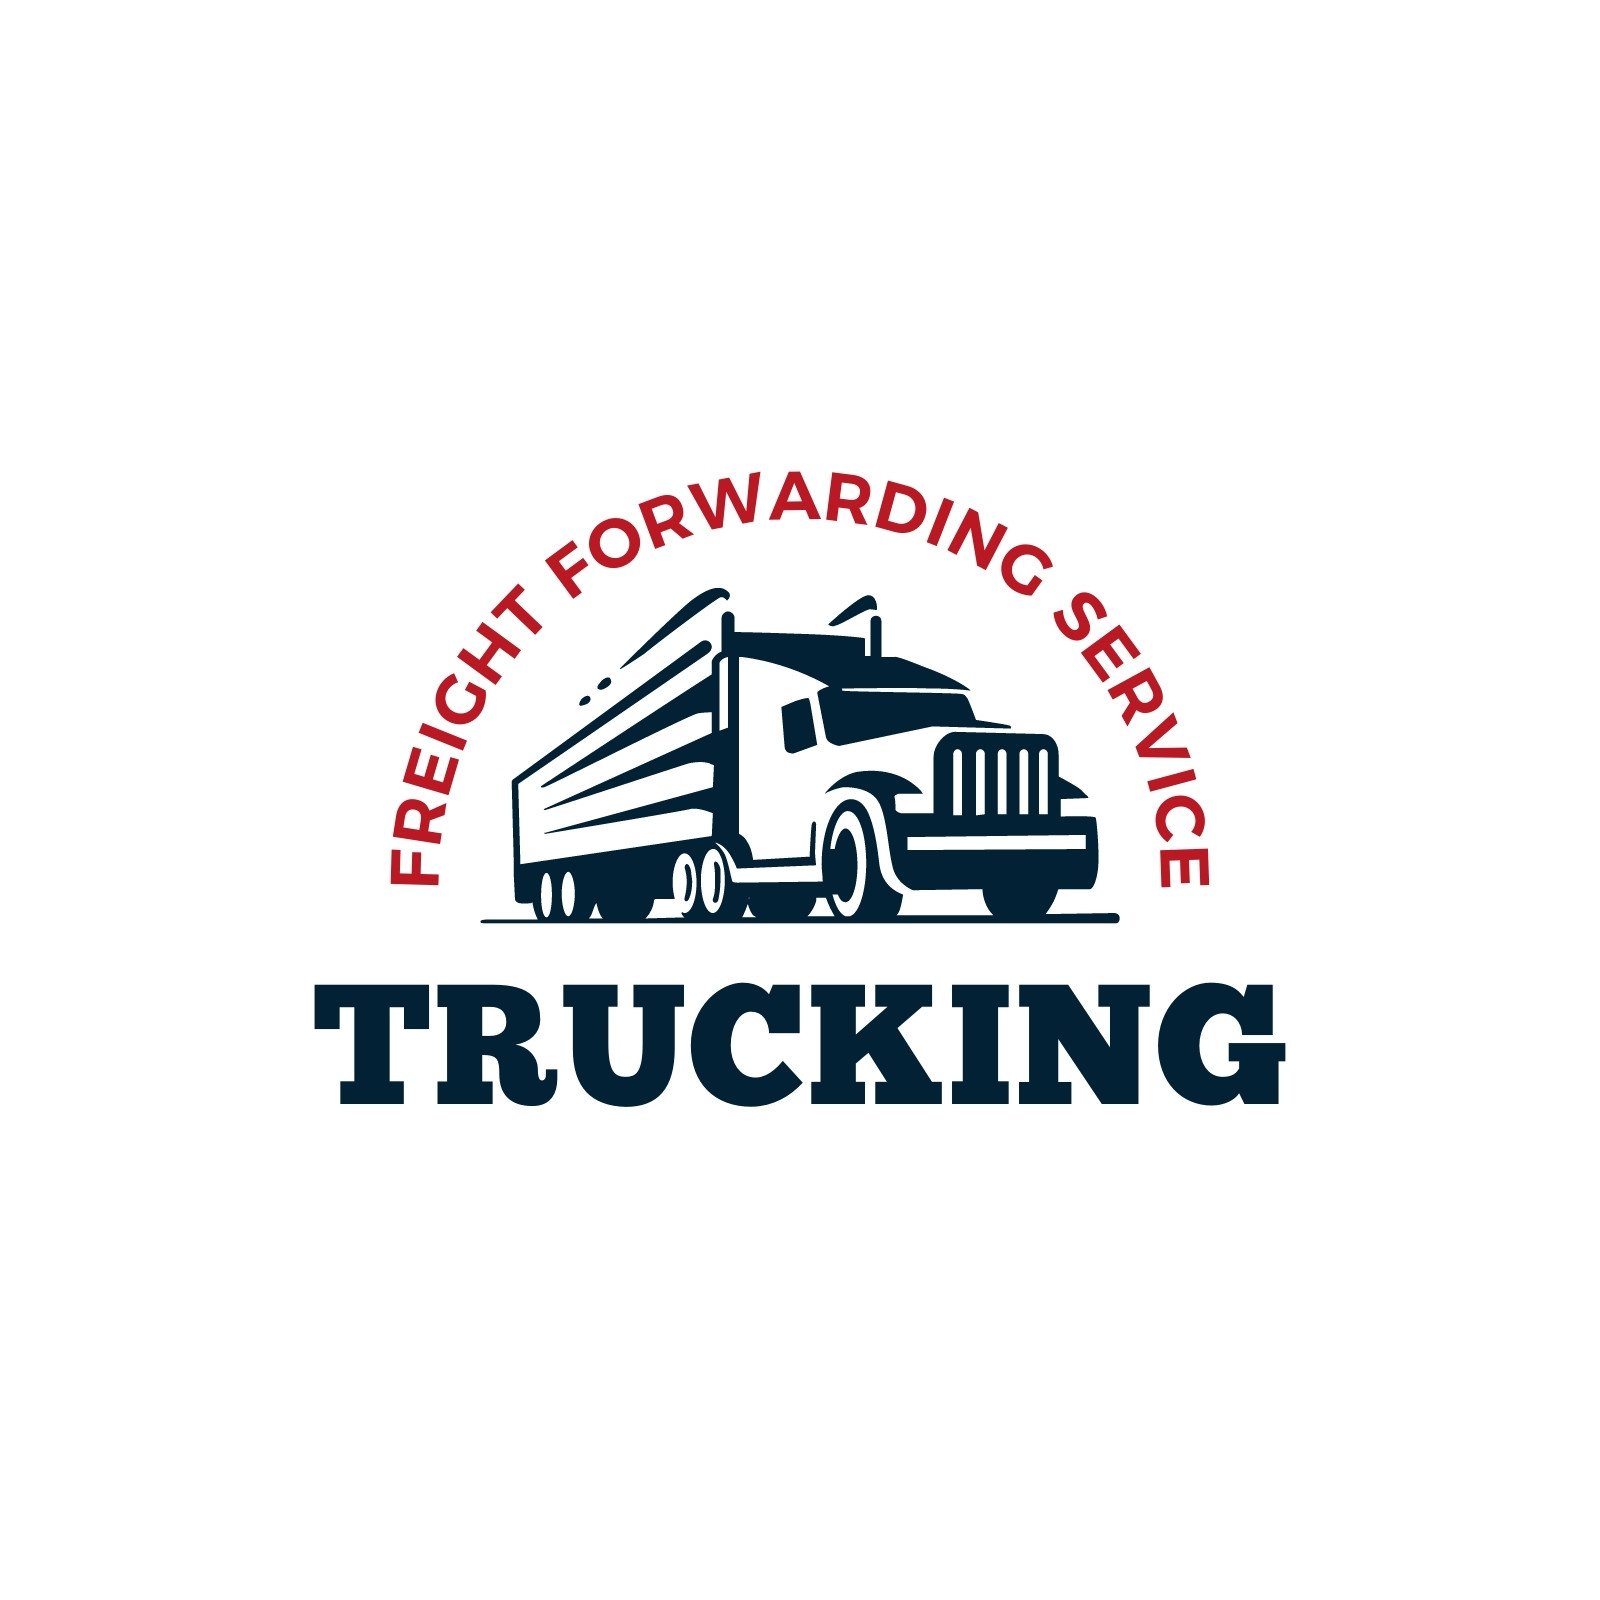 truck logos